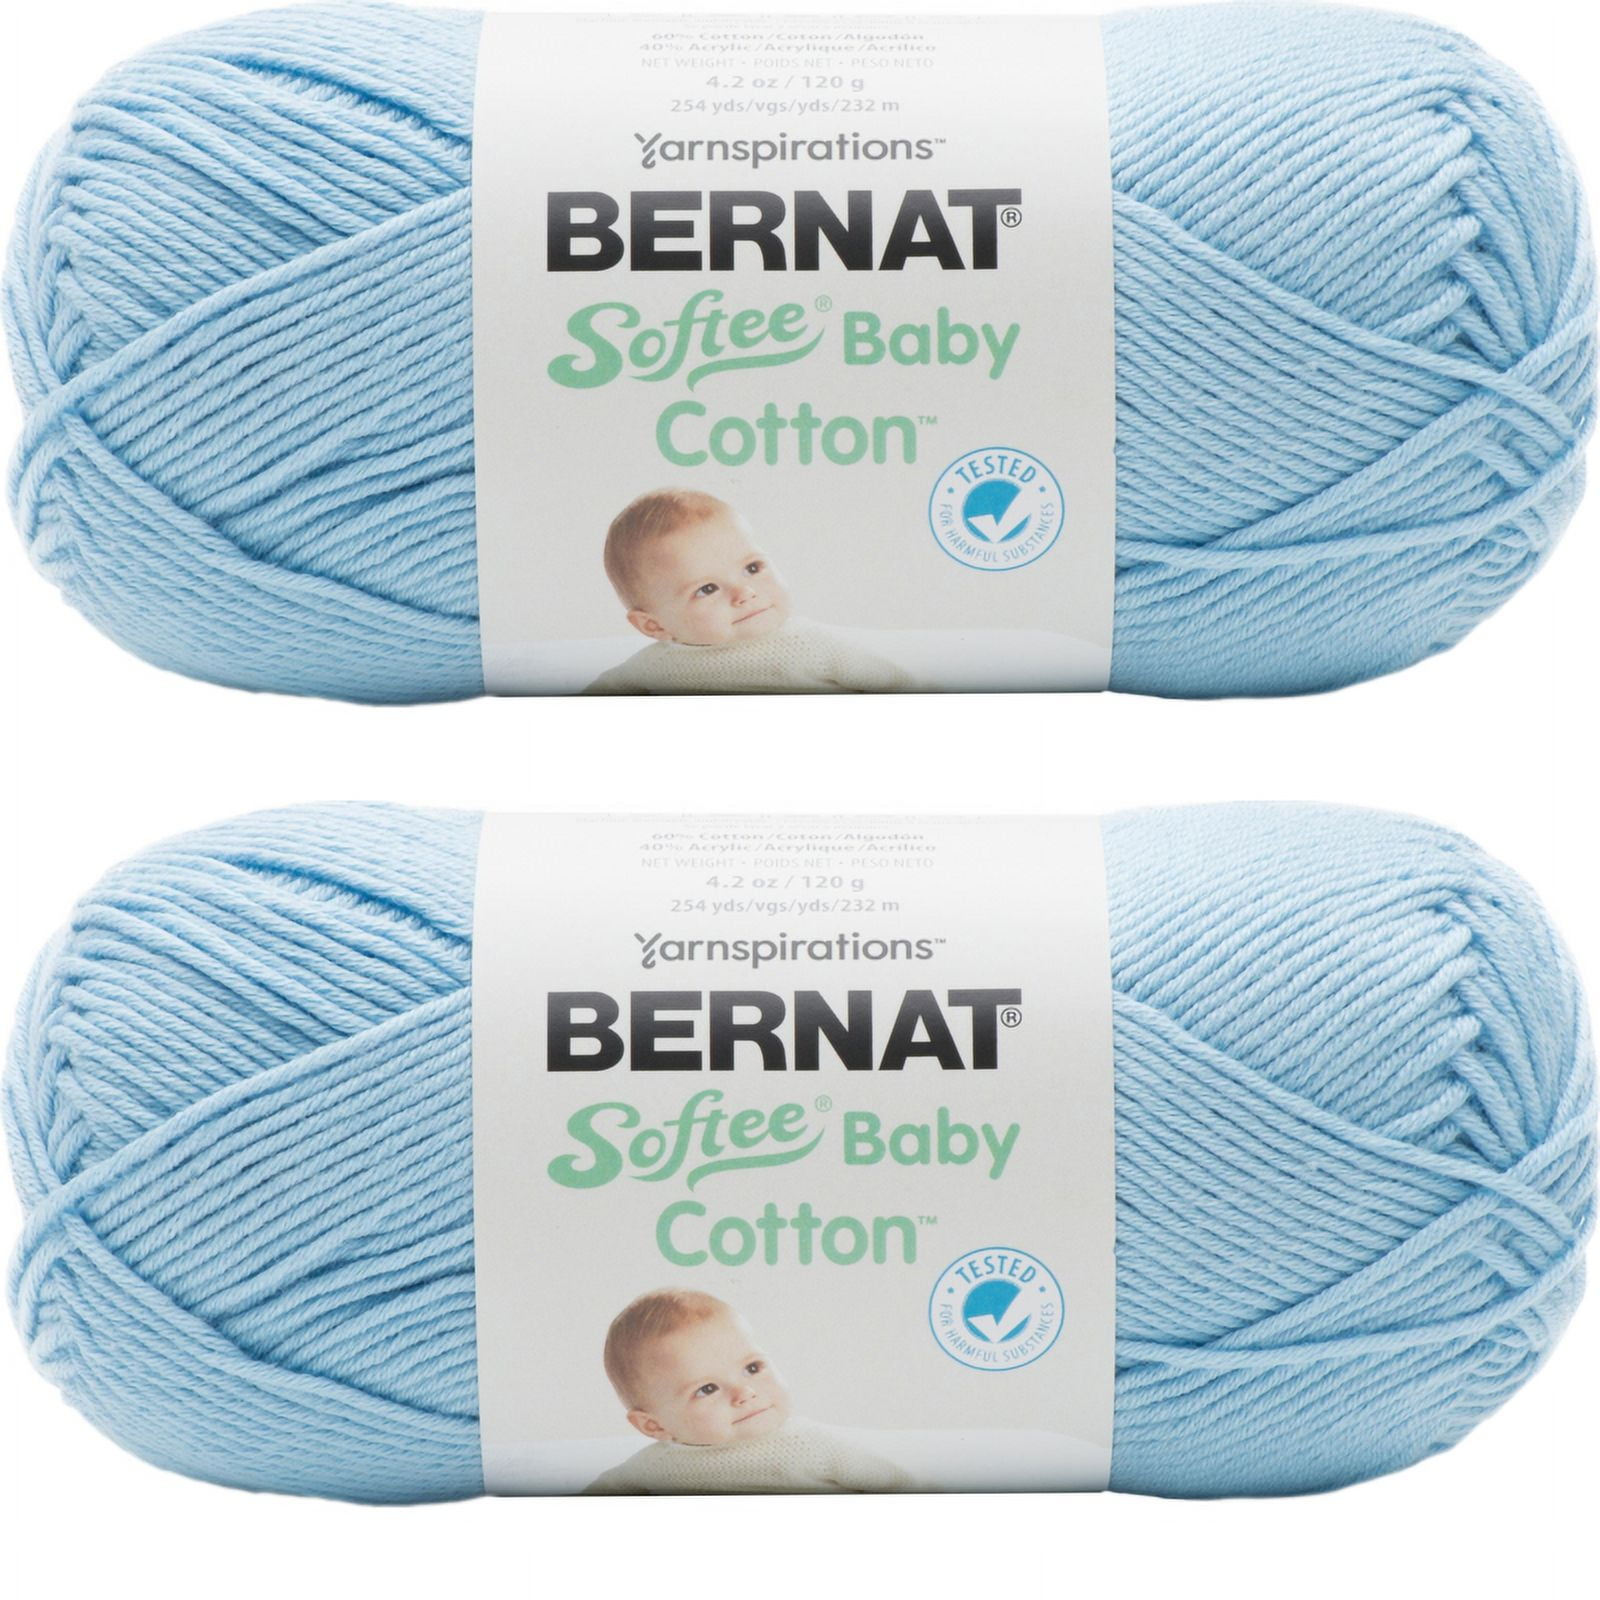 Bernat Cotton Softee Baby Cotton Yarn (120g/4.2 oz), Cotton 